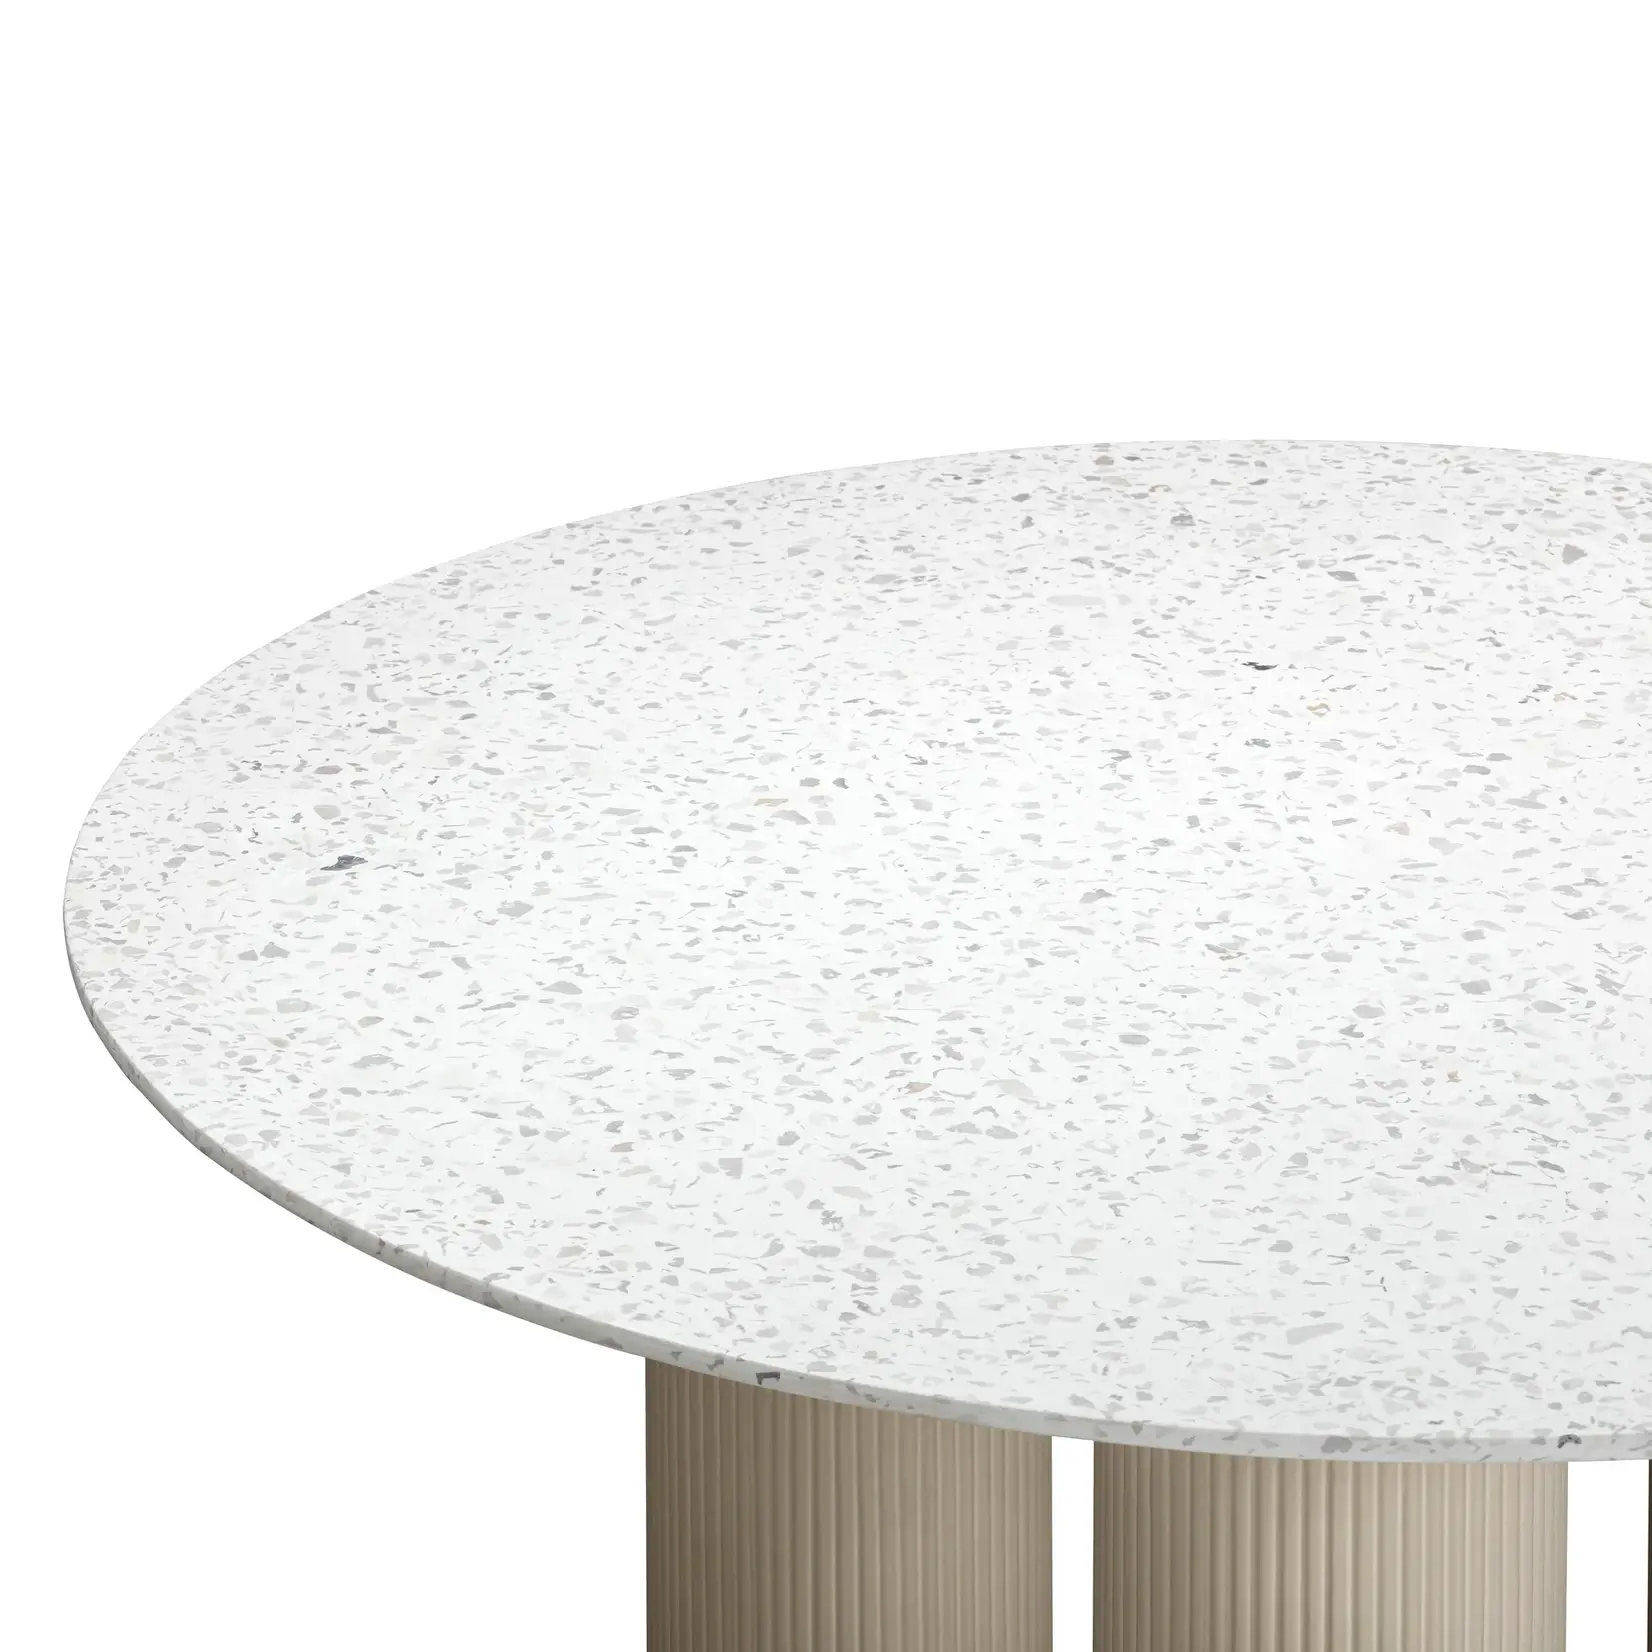 Tov Park Terrazzo Concrete Indoor / Outdoor Dining Table